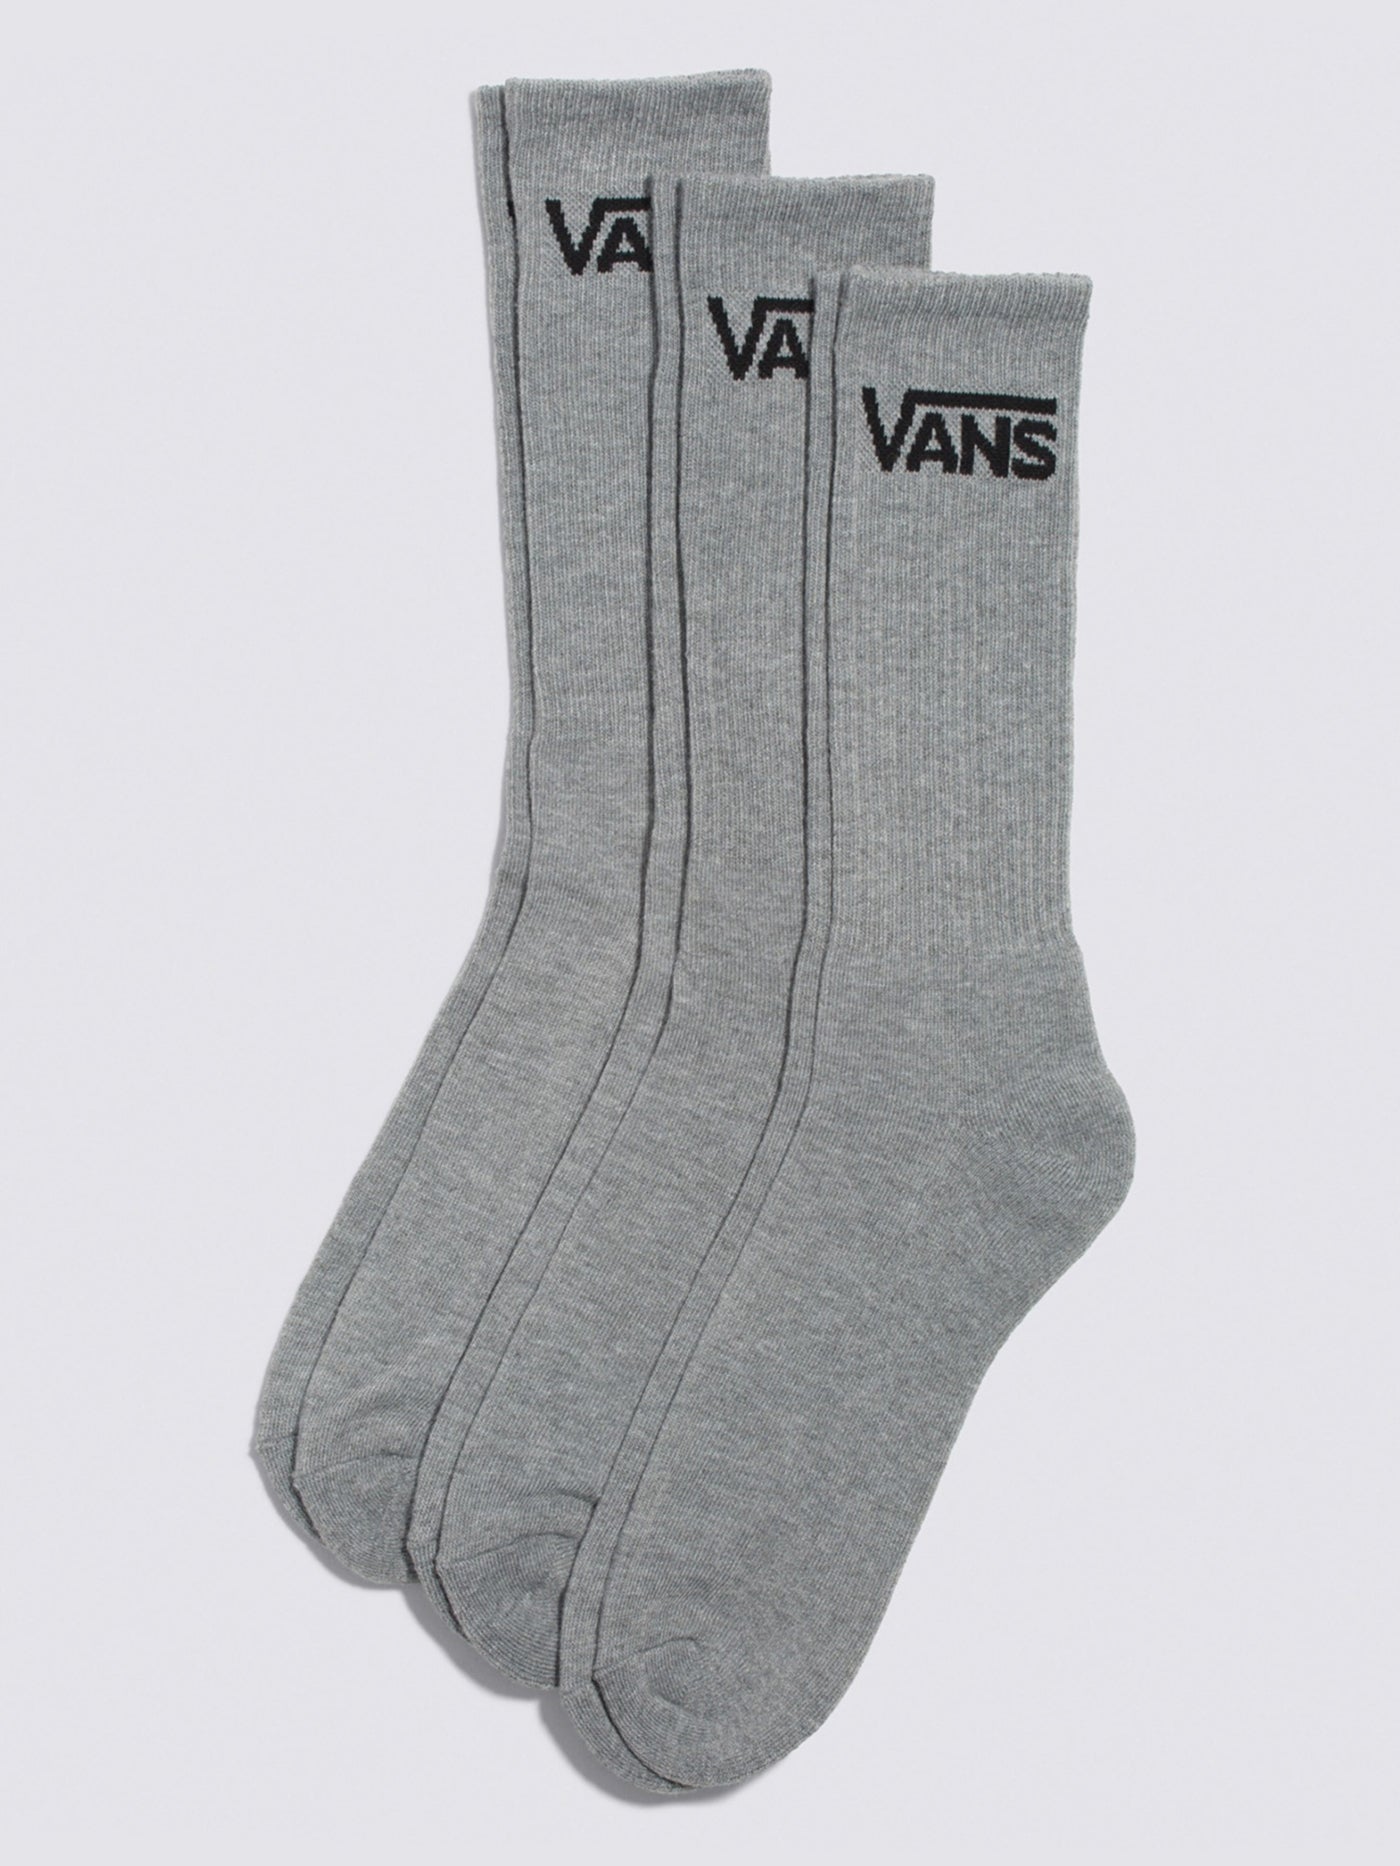 Vans Classic Crew 6.5-9 3 Pack Socks